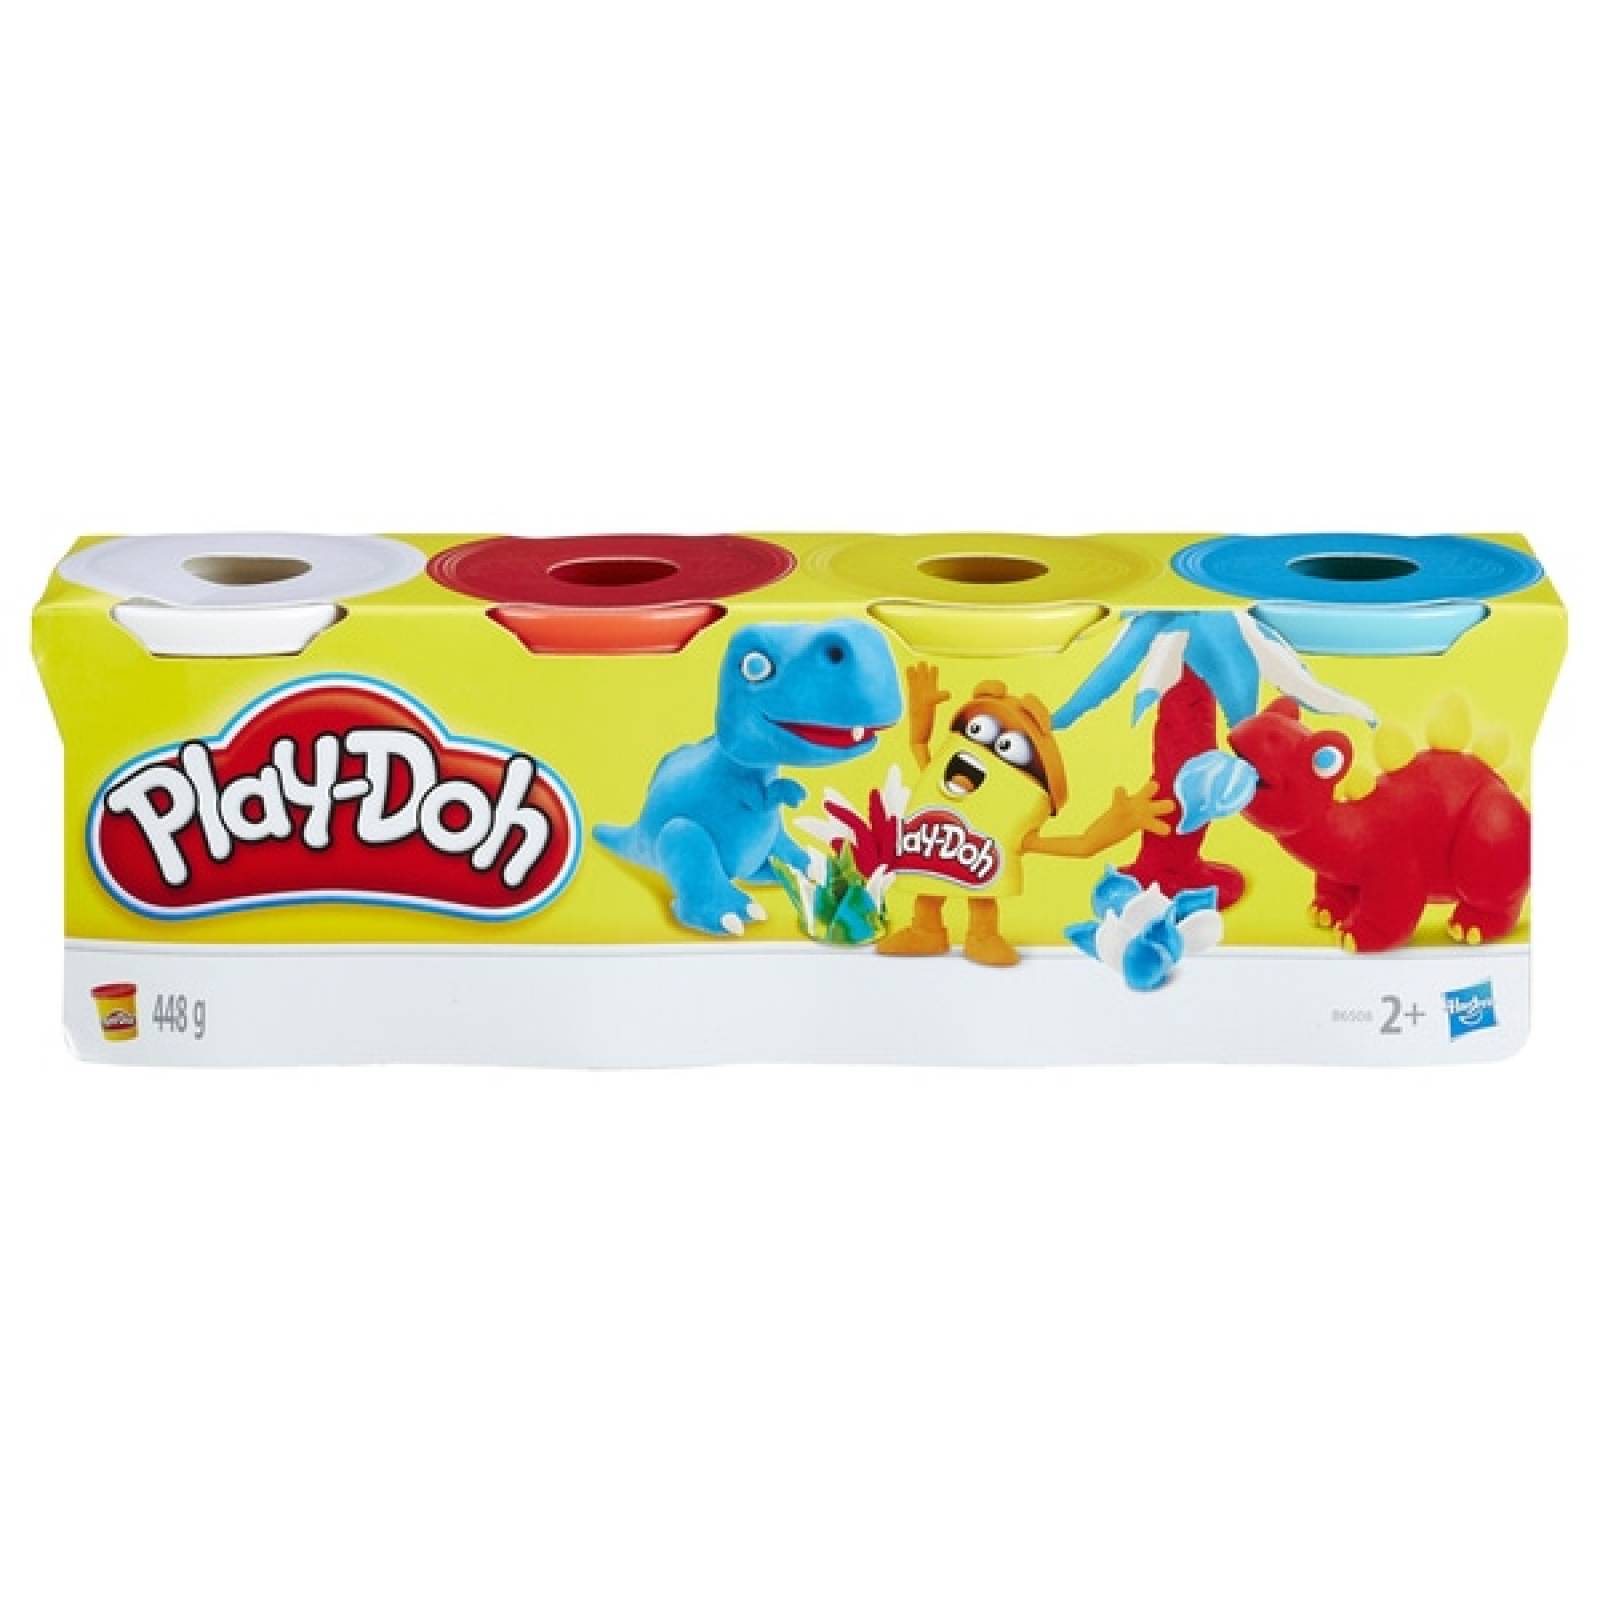 4 Play Doh / Playdough Tubs Set of 4 Large tubs thumbnails